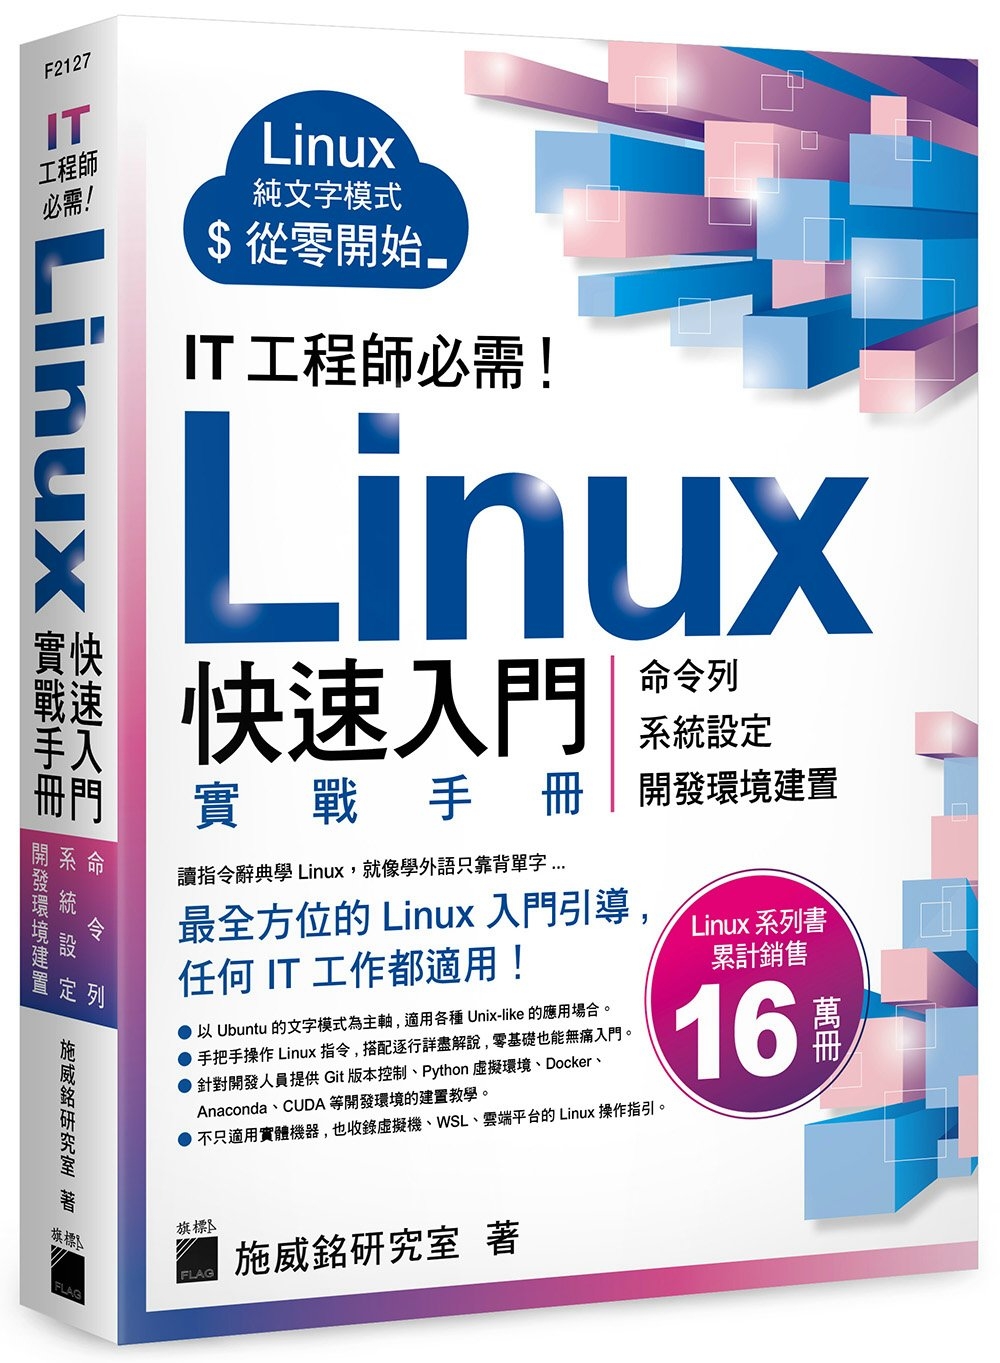 IT 工程師必需！Linux 快速入門實戰手冊 - 從命令列、系統設定到開發環境建置, 實體機、虛擬機、容器化、WSL、雲端平台全適用